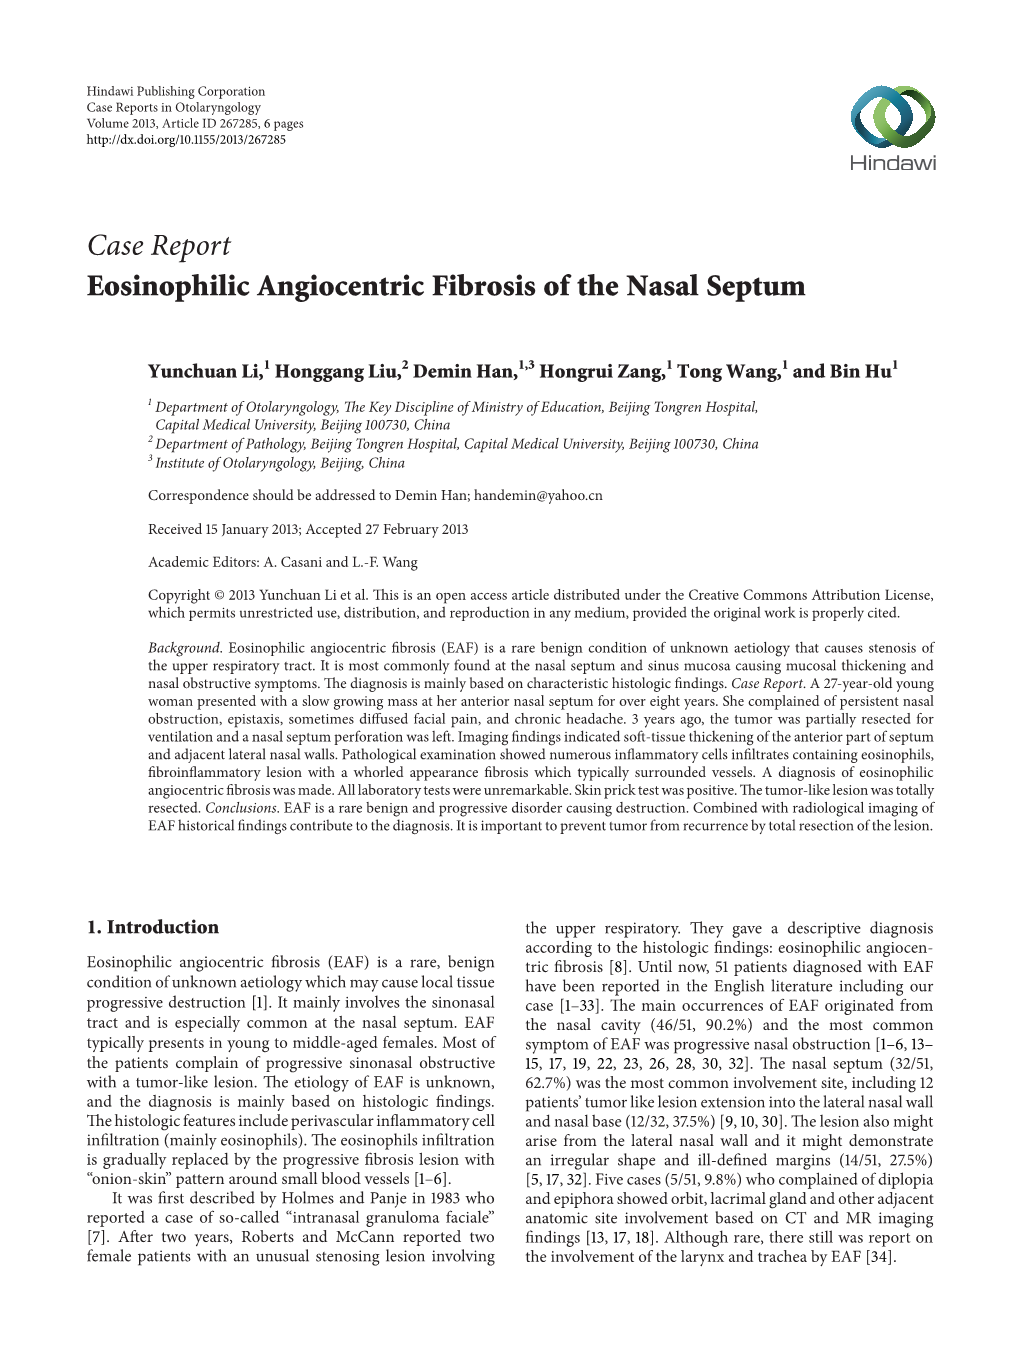 Eosinophilic Angiocentric Fibrosis of the Nasal Septum